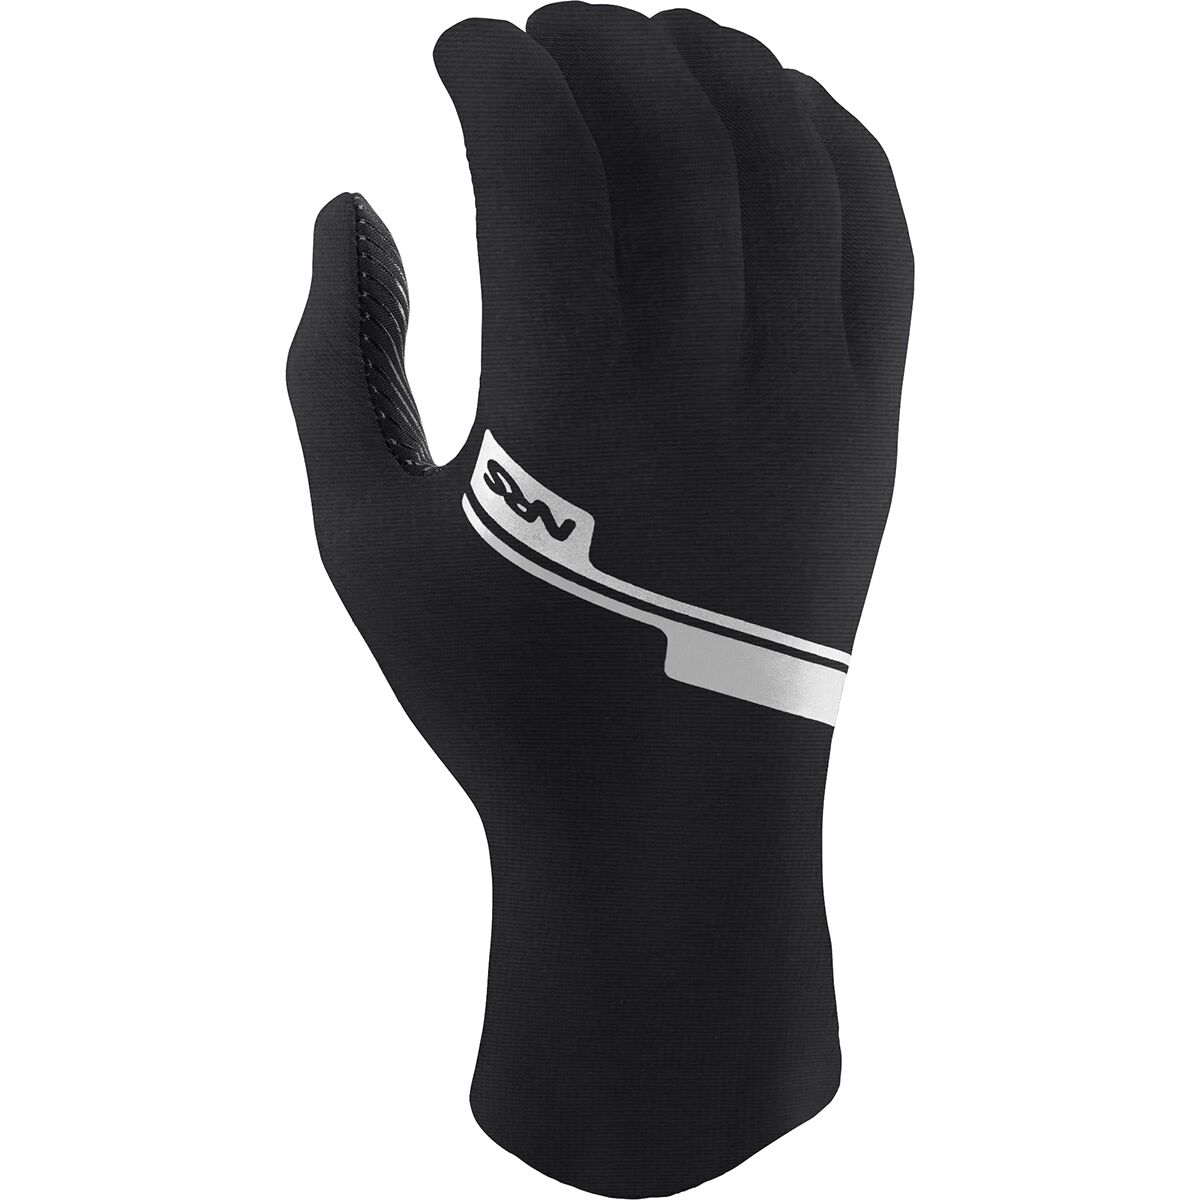 NRS Hydroskin Glove - Men's